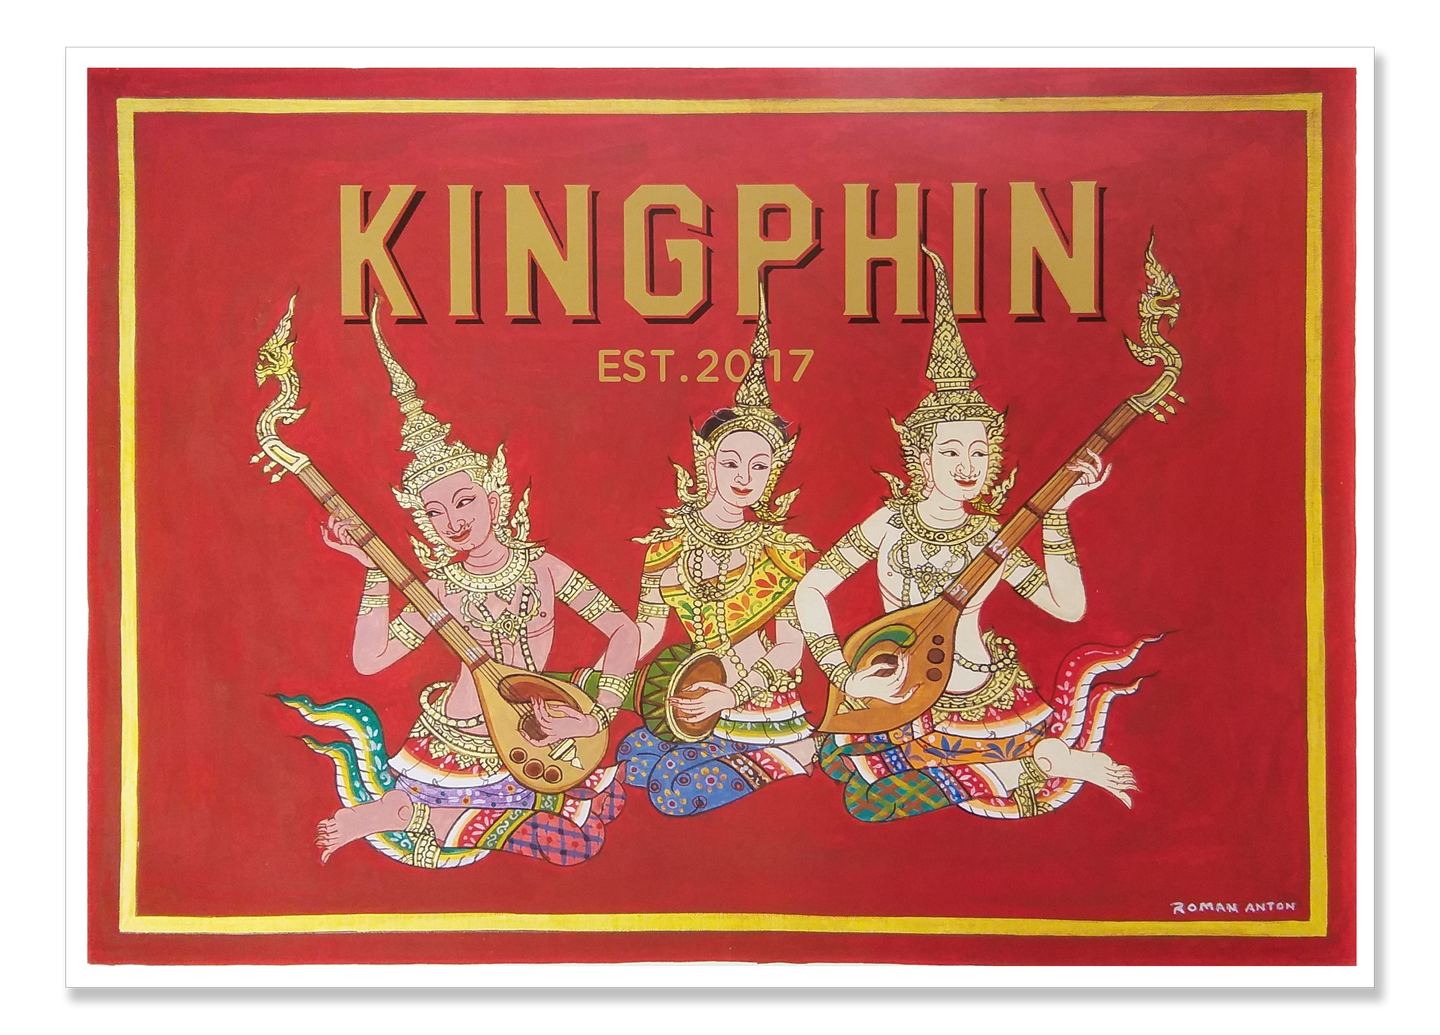 KingPhin Custom Poster 3